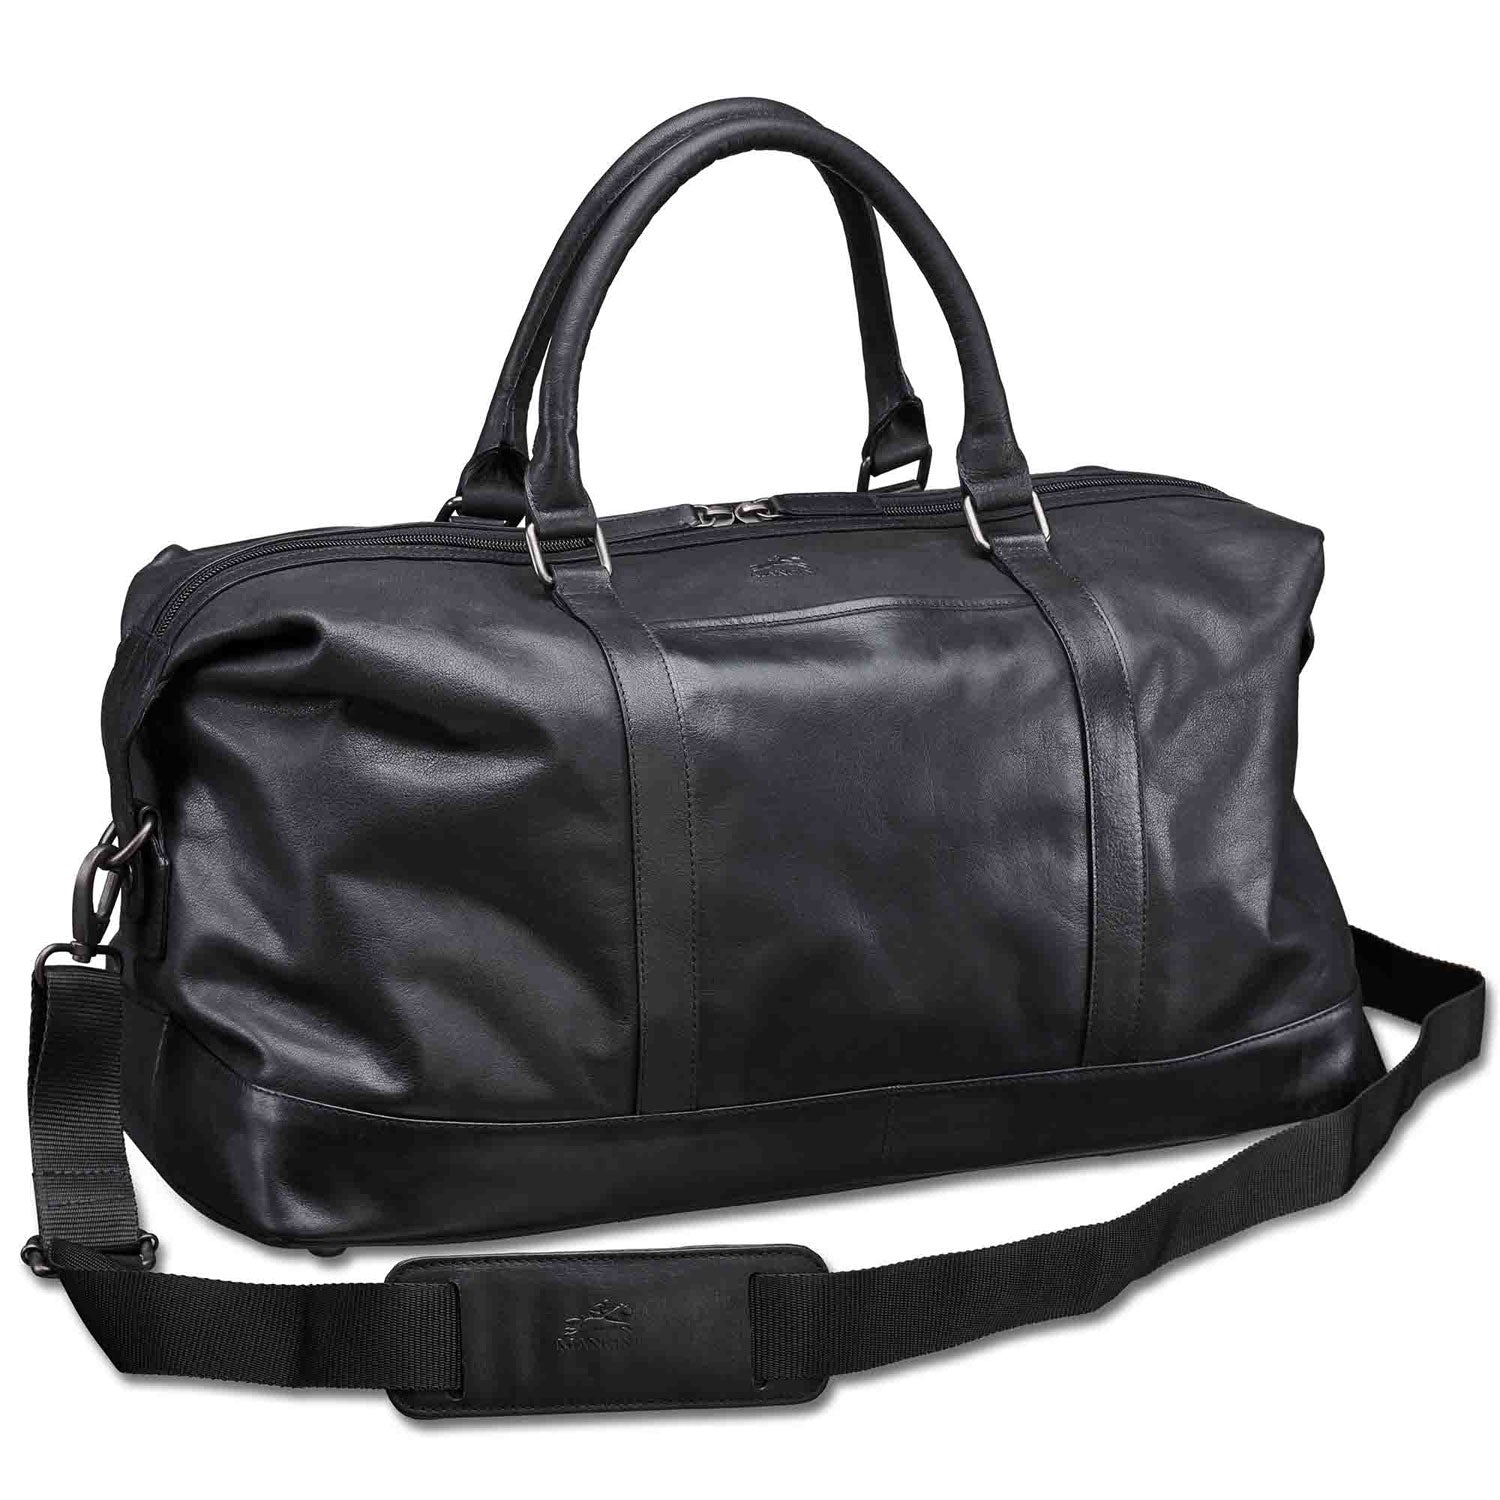 Mancini Leather Carry-on Duffle Bag, 20" x 10" x 12", Black